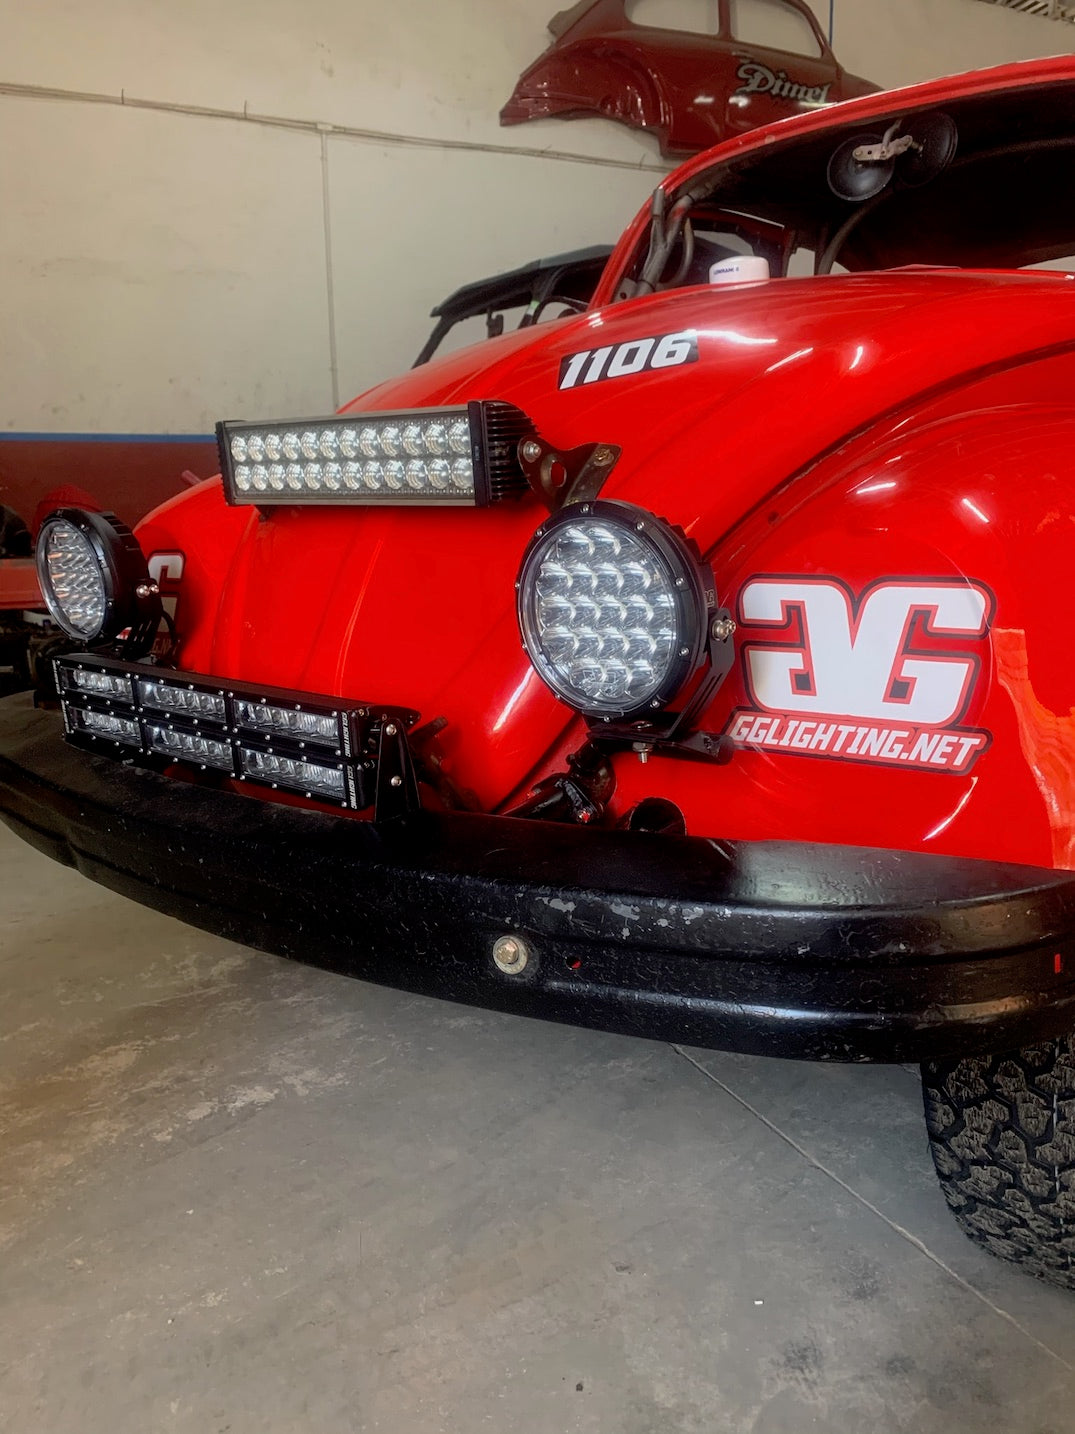 7” DayMaker Long Range LED Light Off Road UTV Overlanding Racing Baja Bug class 10